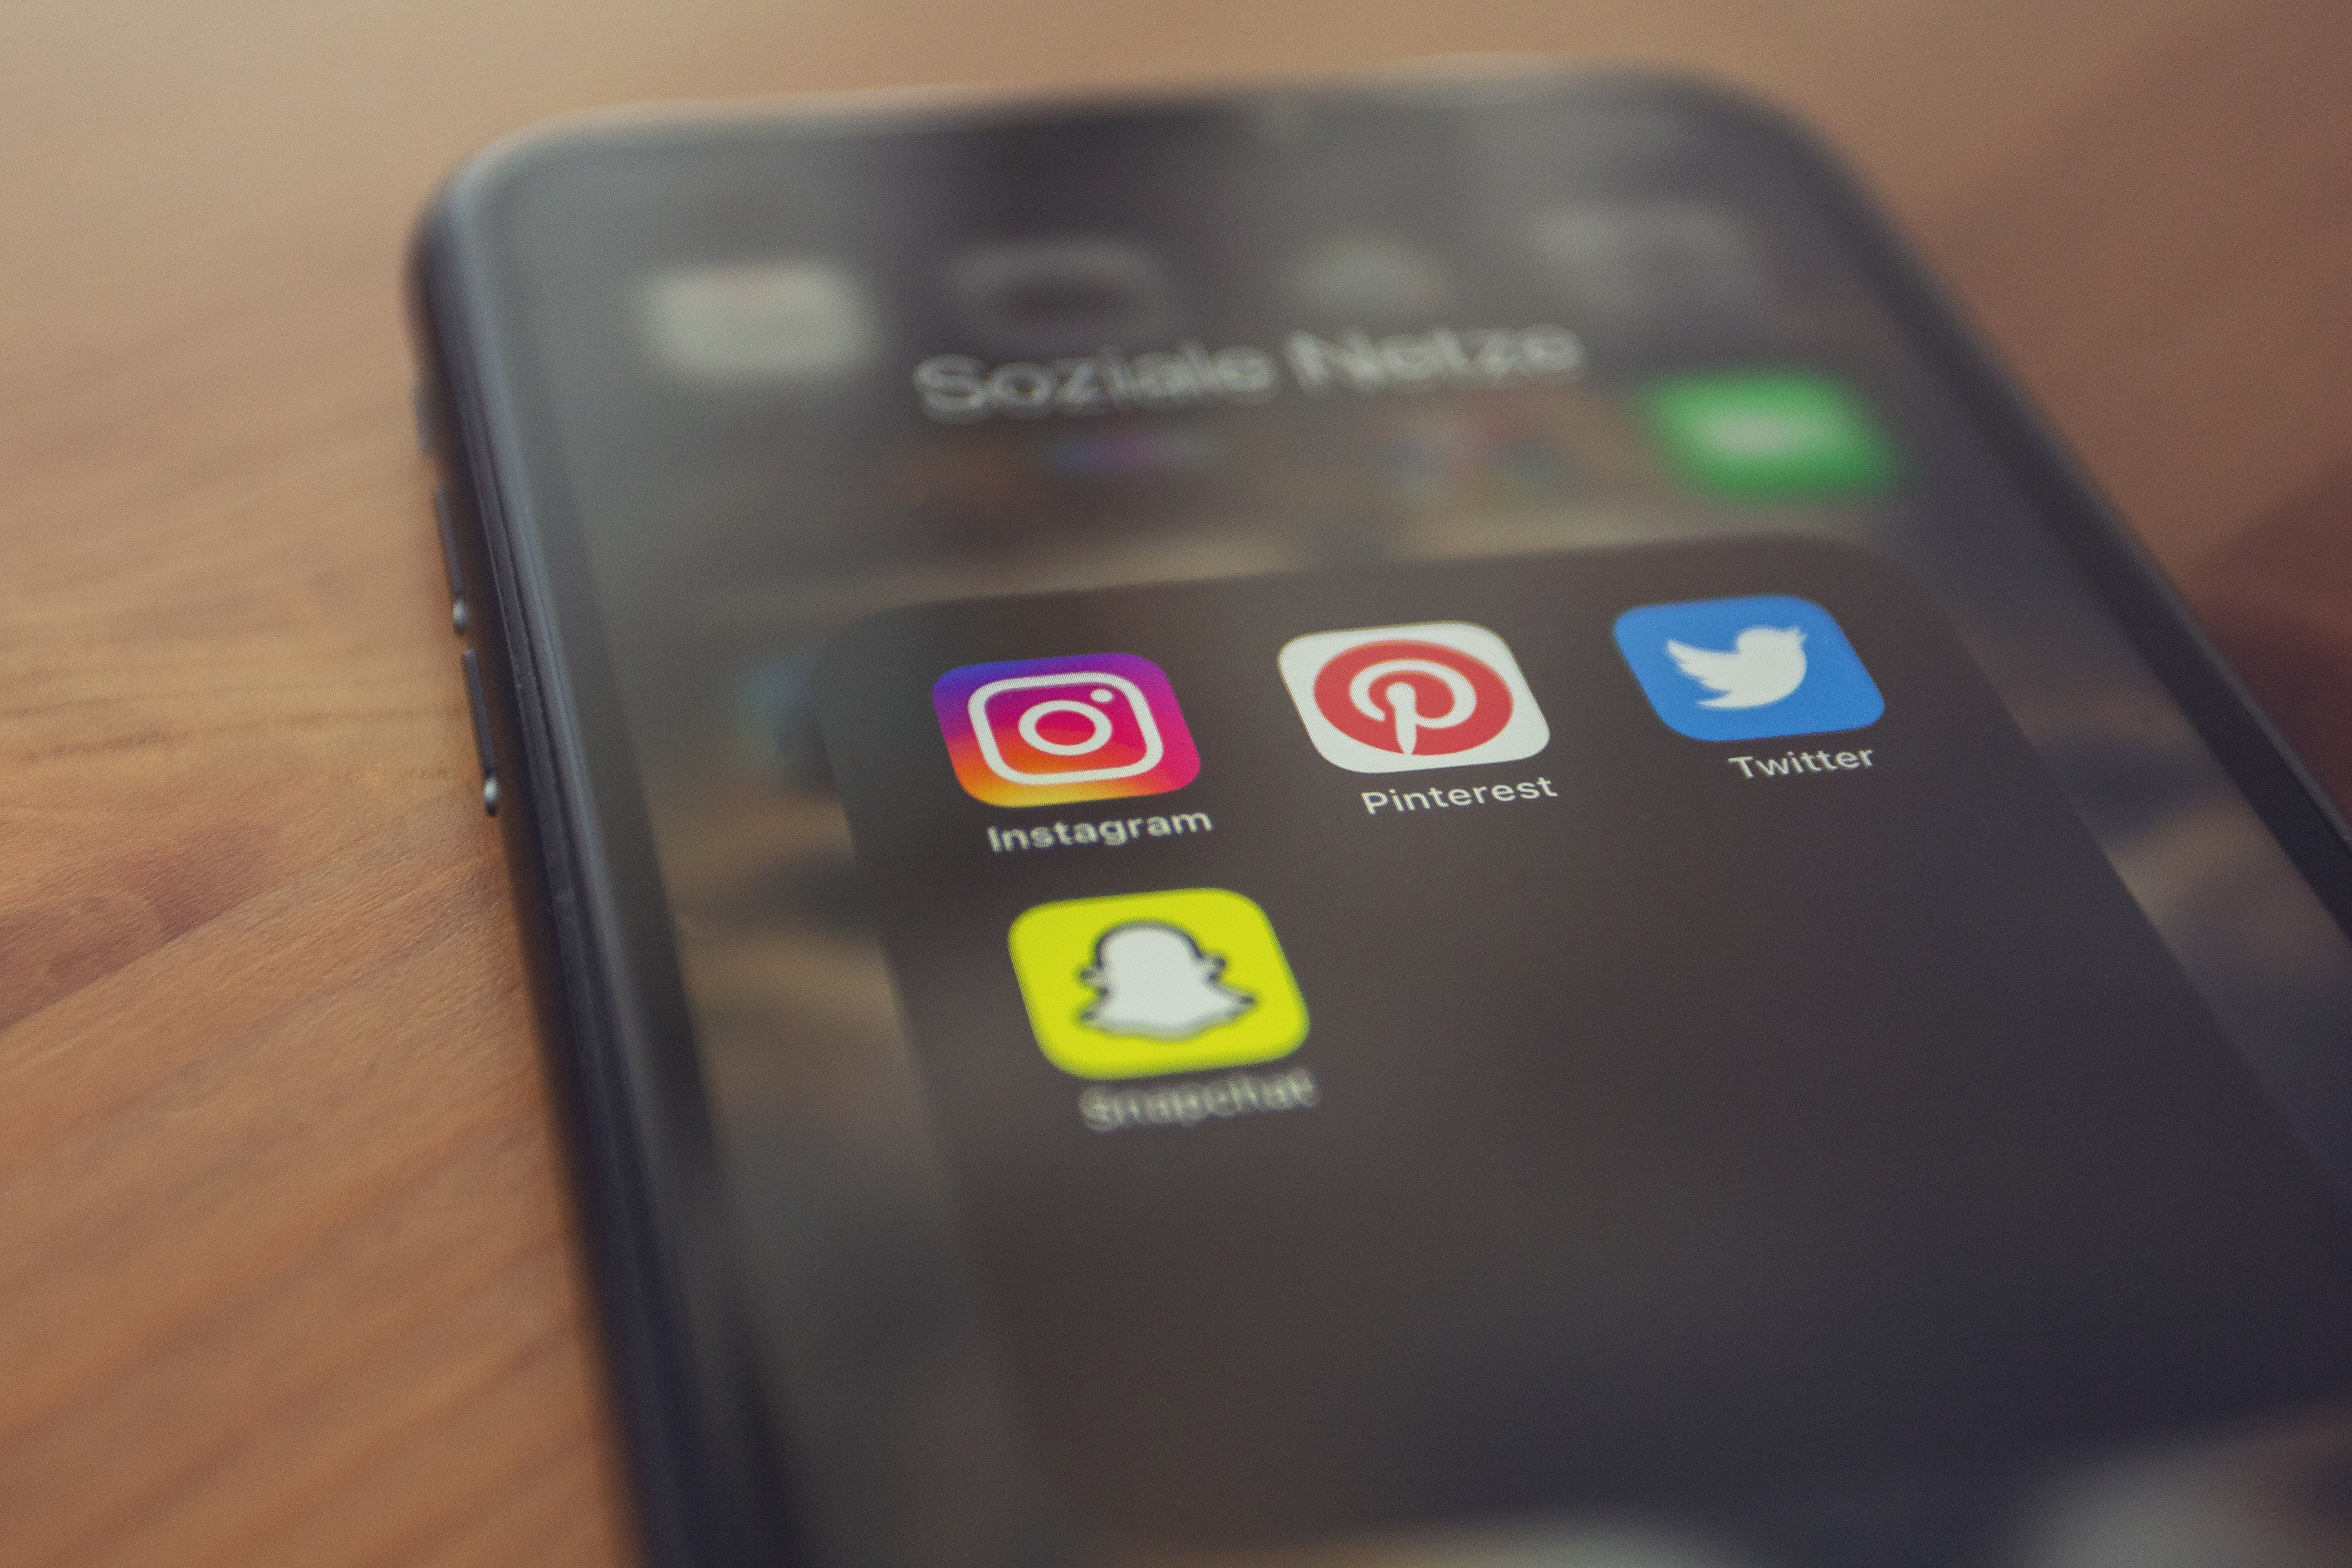 Snapchat, Twitter-Backed Indian Social Media Unicorn Raises Another $145M